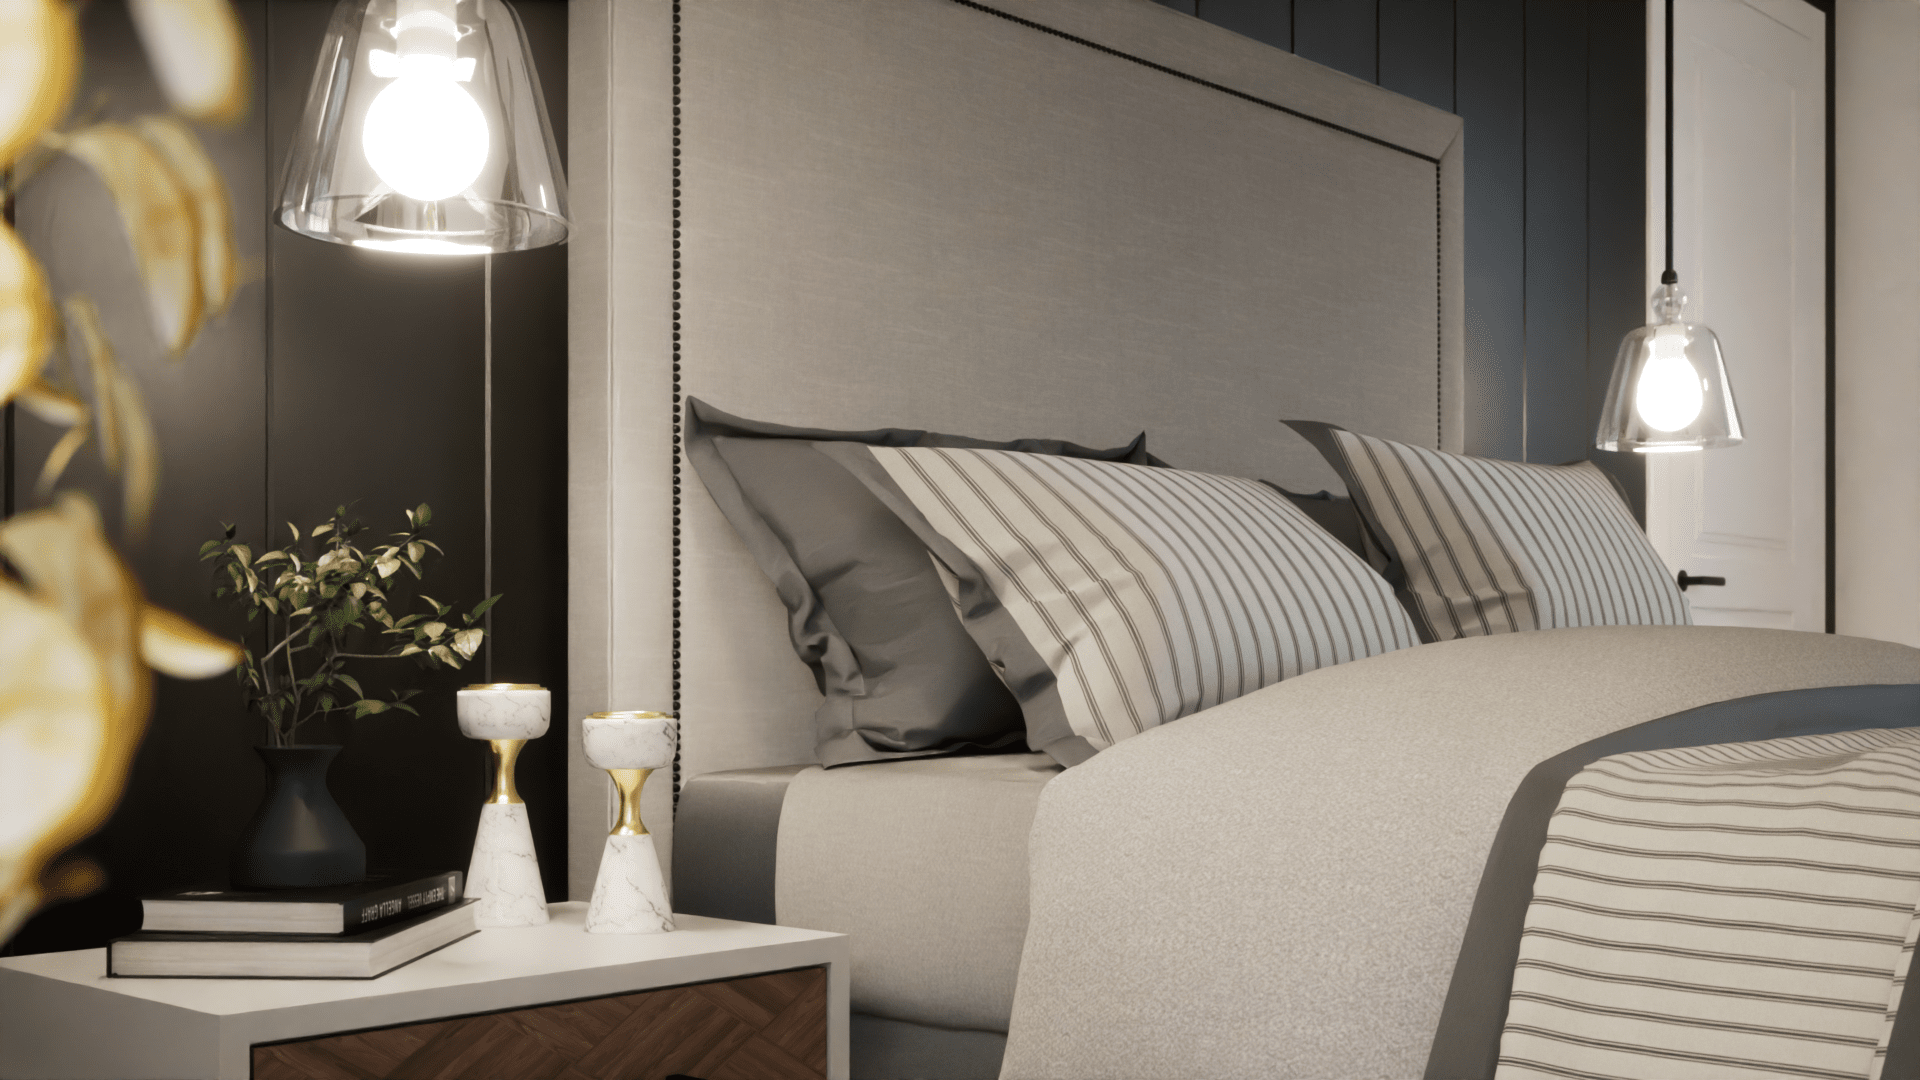 Bedroom and lights interior design rendering